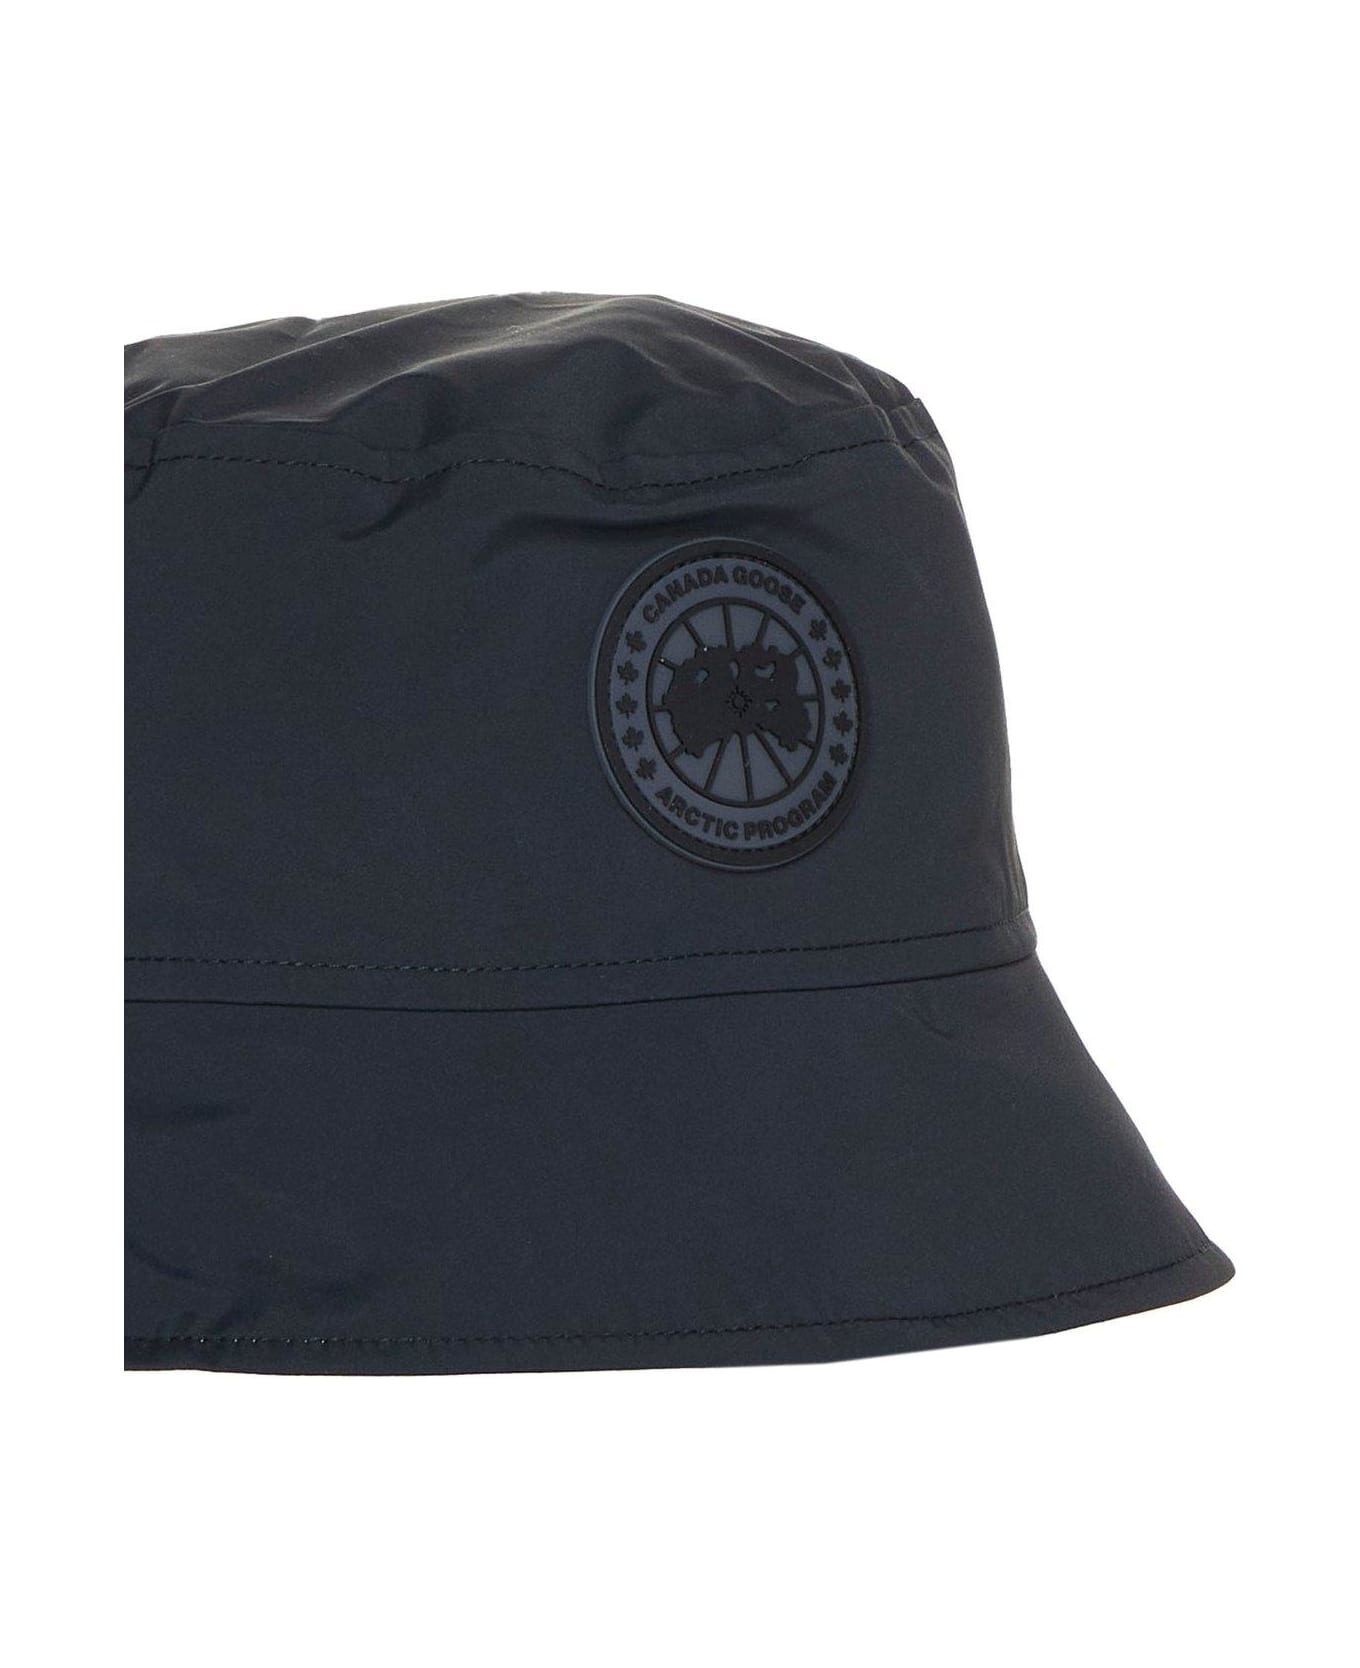 Canada Goose Logo Patch Bucket Hat - BLACK/NEUTRALS